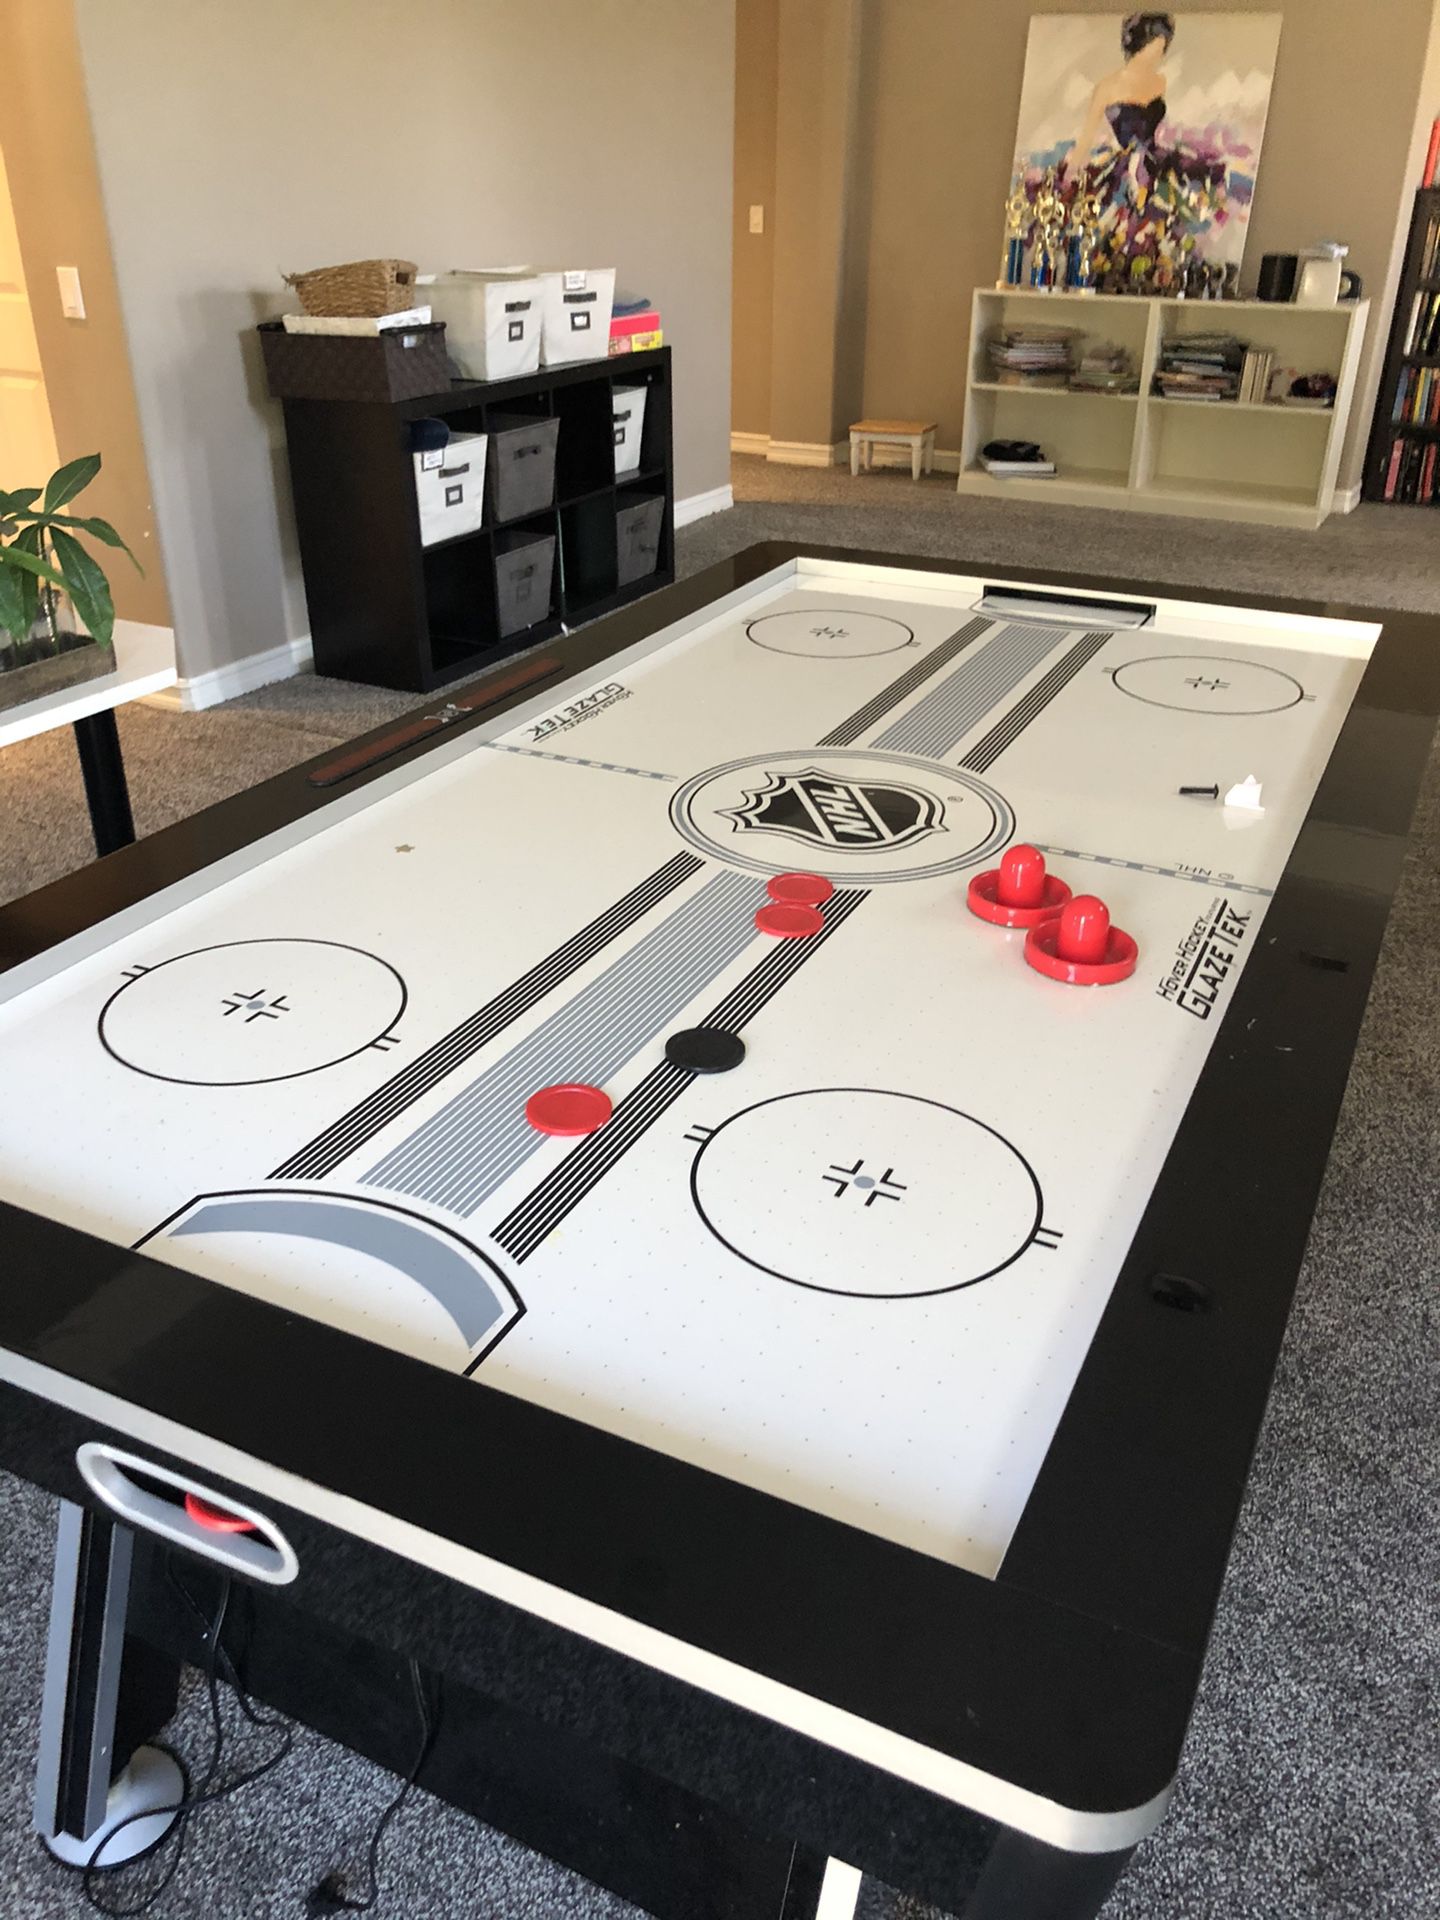 Air hockey table by Hover Hockey with Glaze Tek